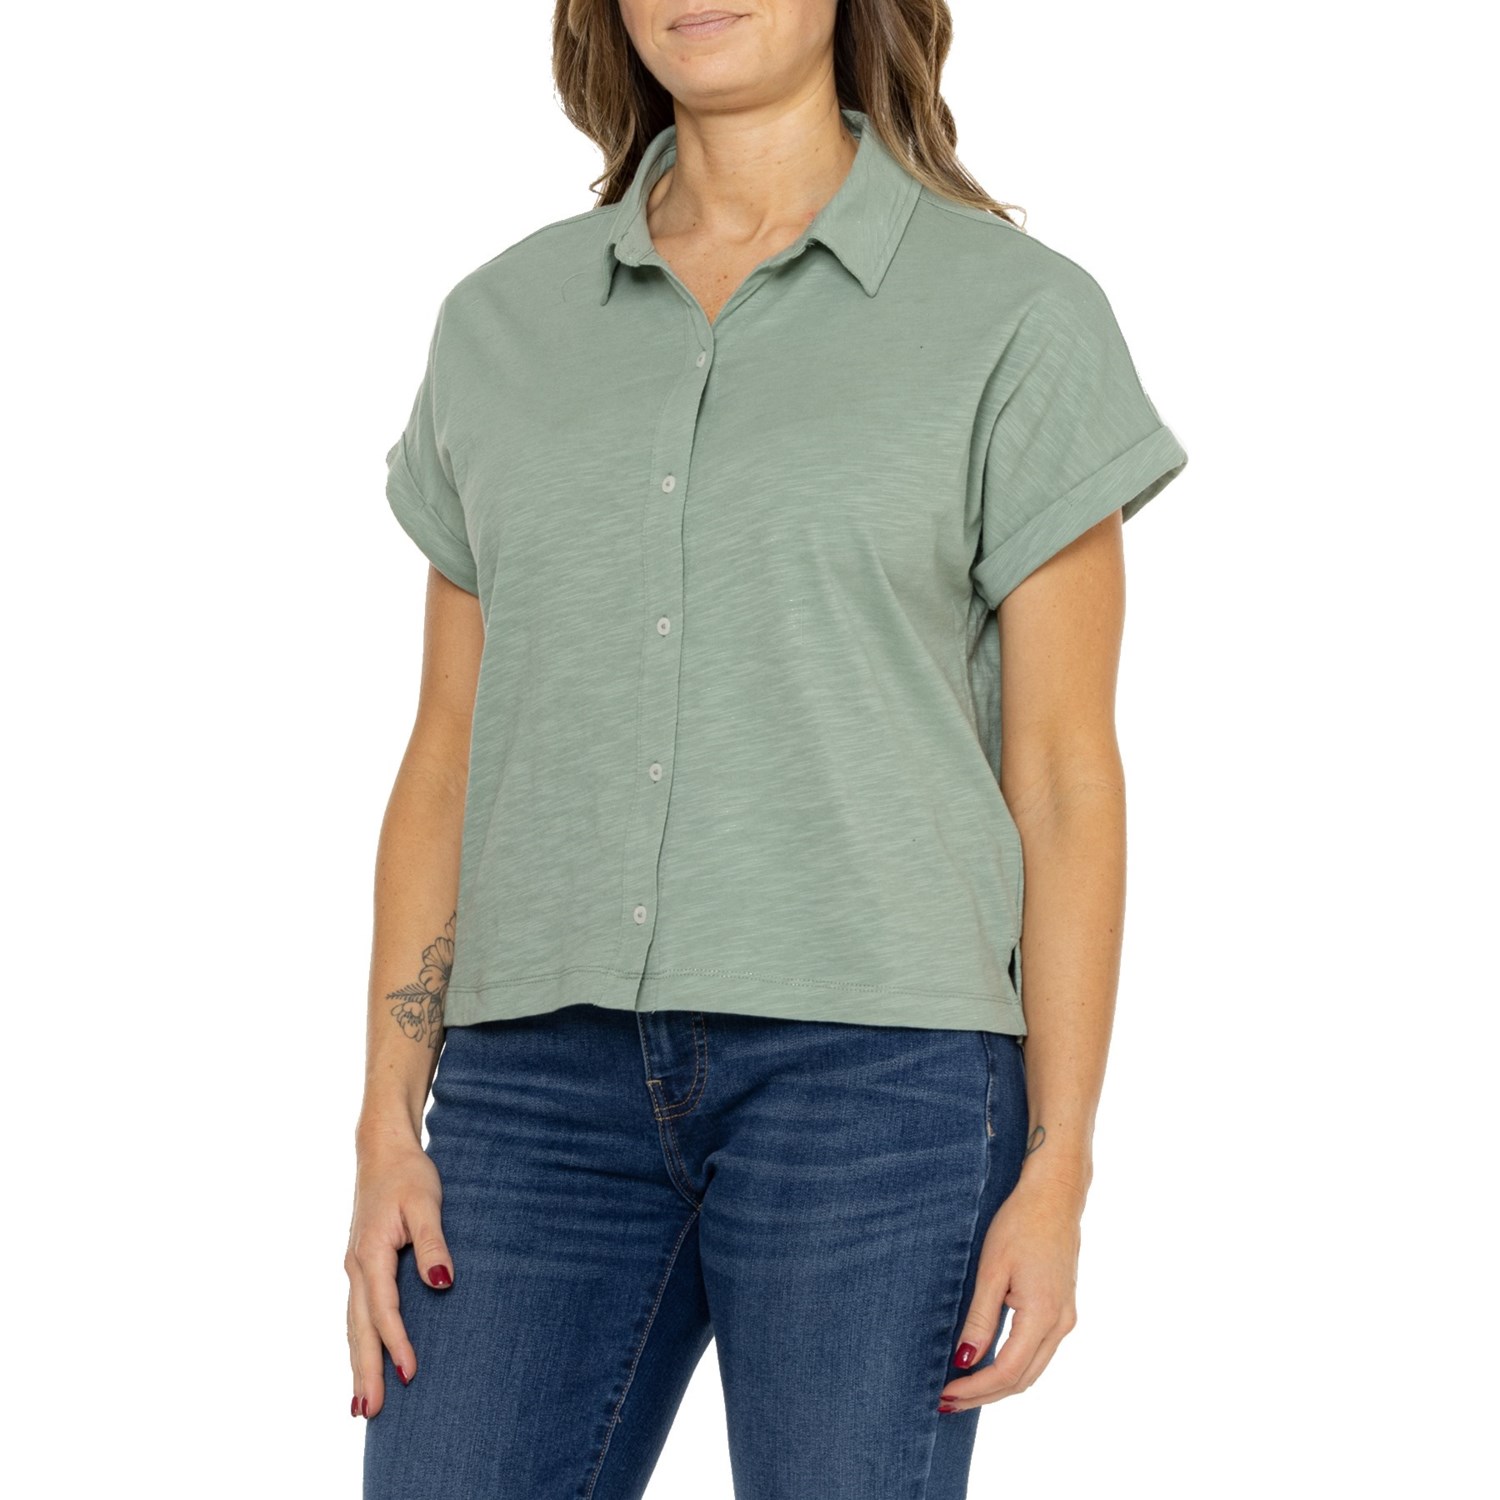 () eChN[WOJpj[ {^Abv h} Vc - V[g X[u Telluride Clothing Company Button-Up Dolman Shirt - Short Sleeve Lily Pad